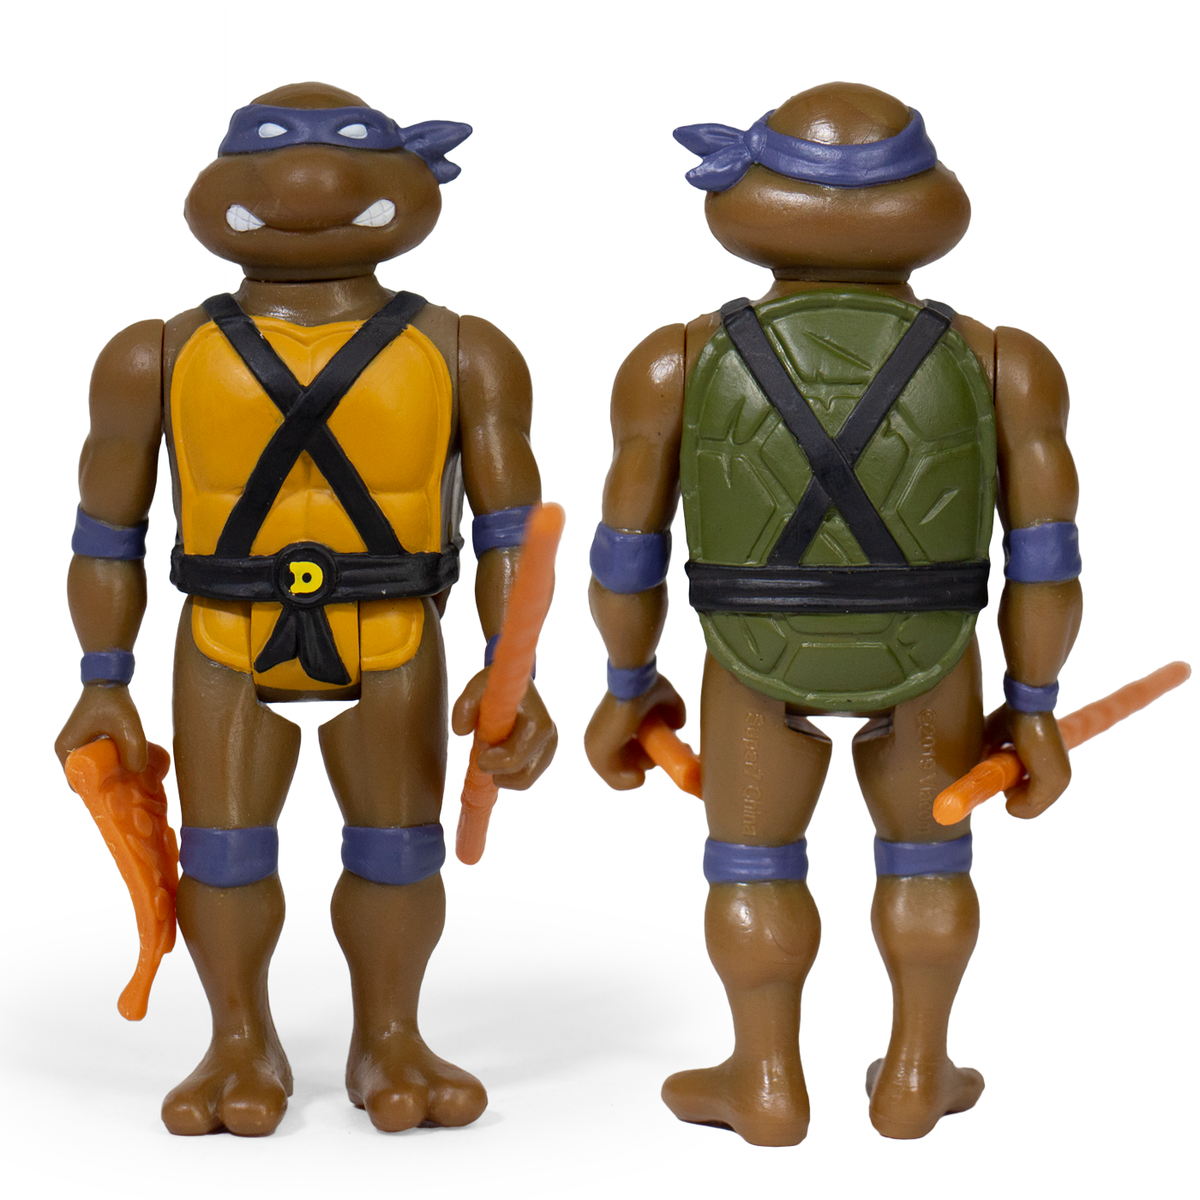 Teenage Mutant Ninja Turtles ReAction Figure - Donatello - Zlc Collectibles